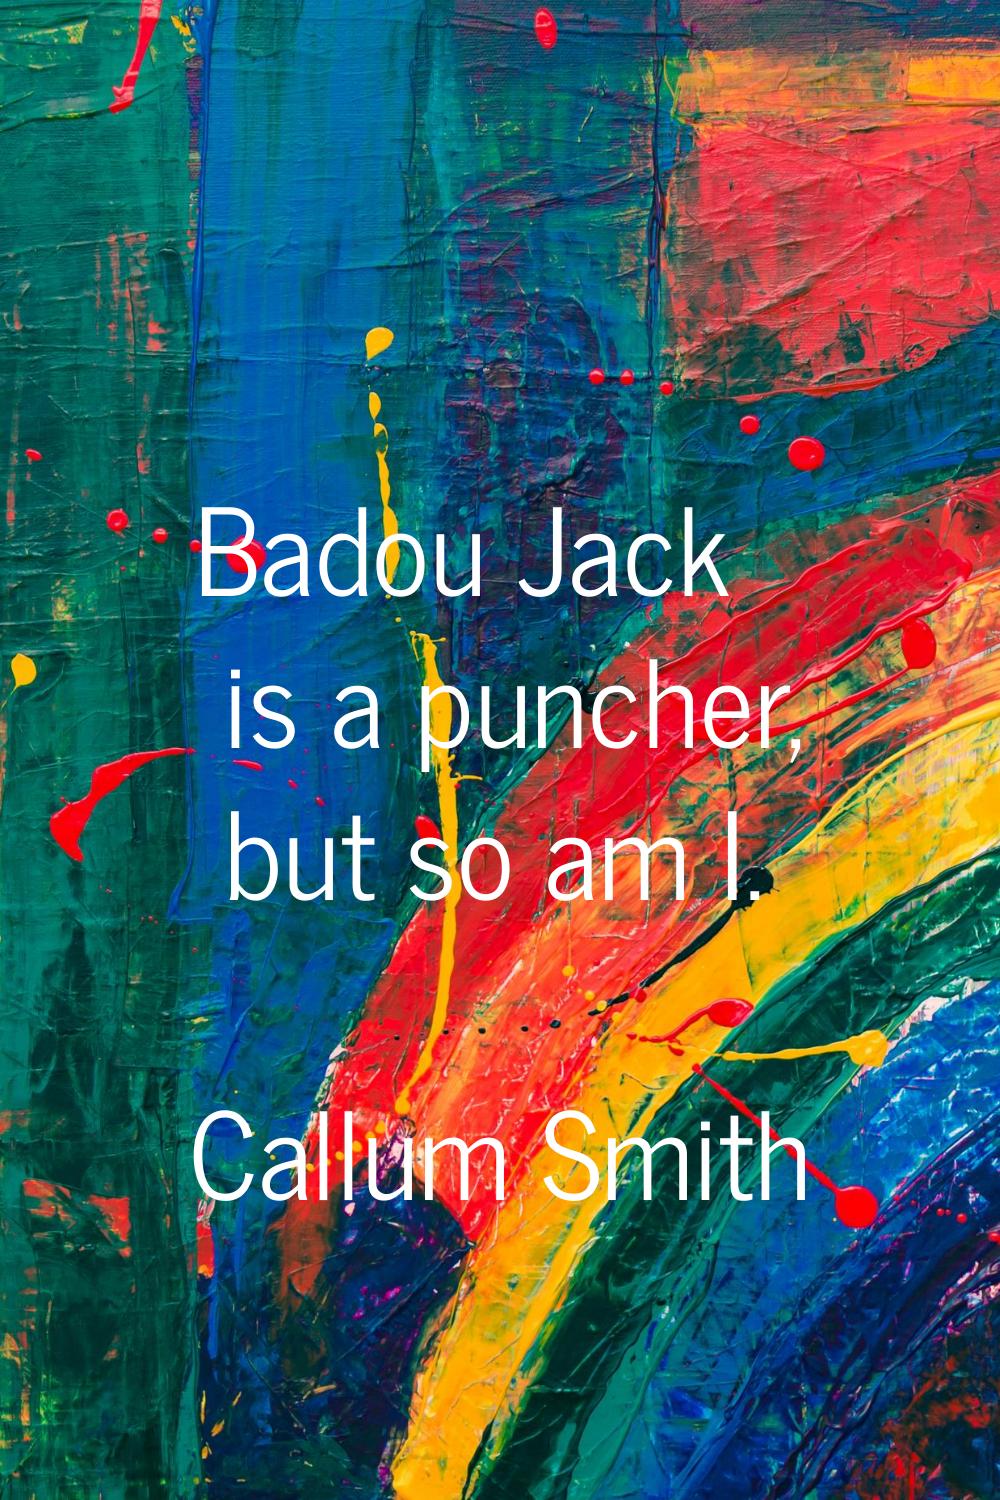 Badou Jack is a puncher, but so am I.